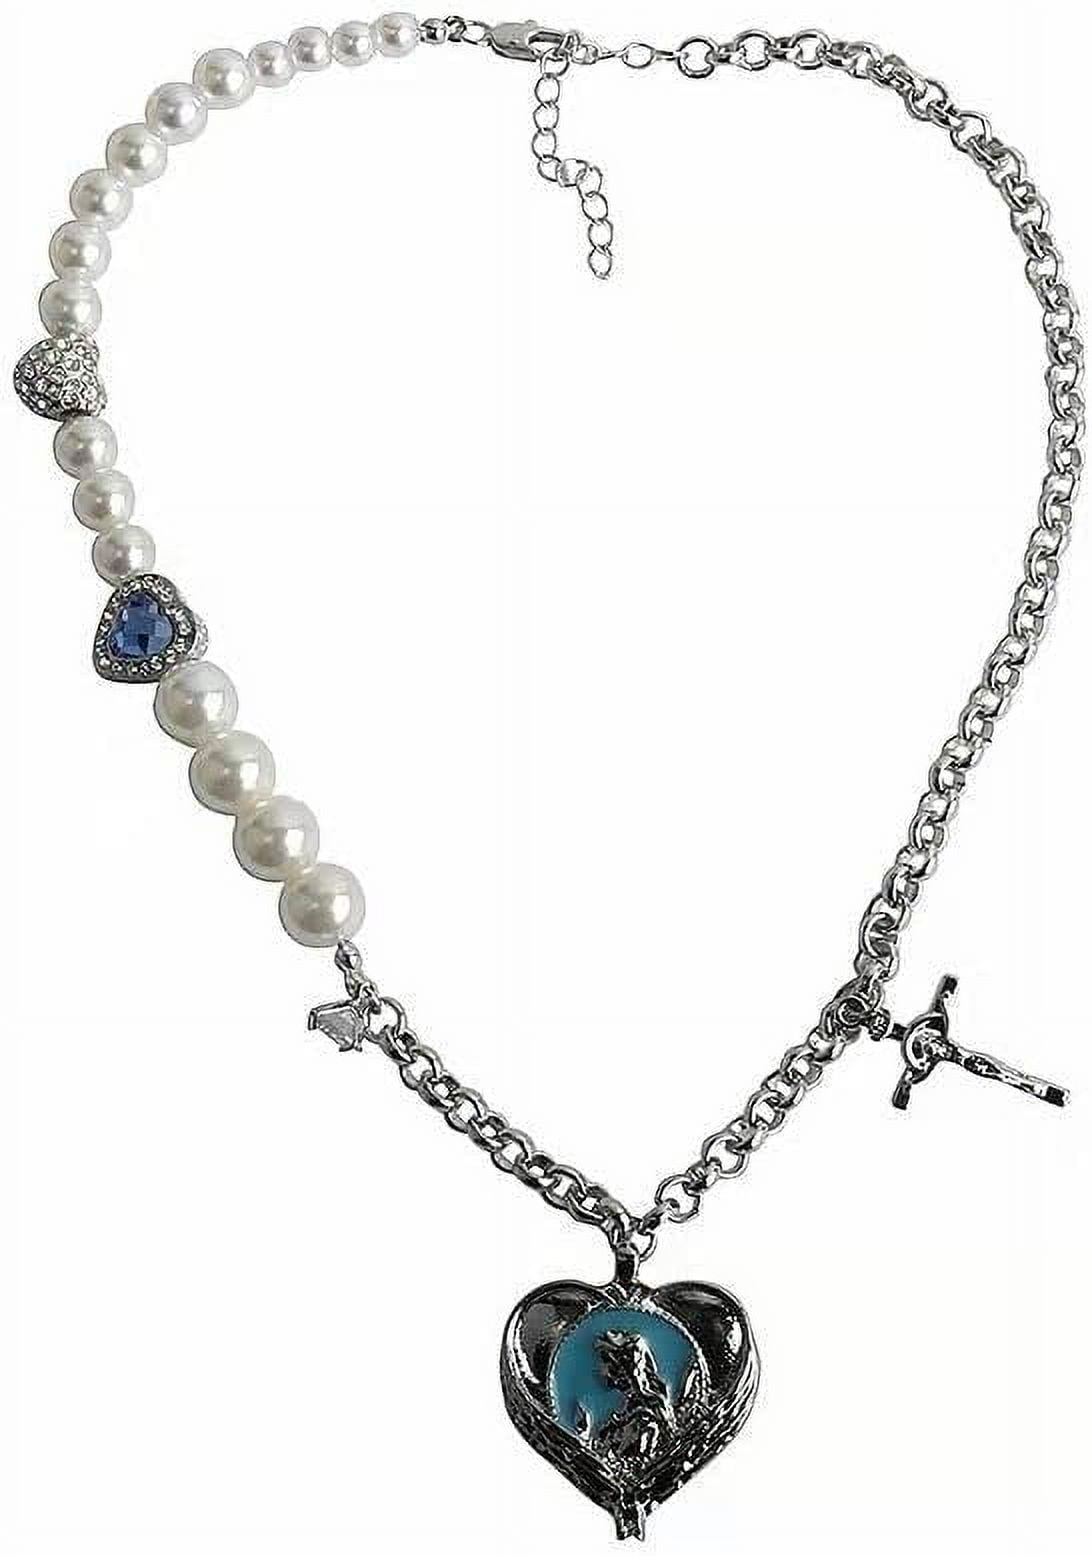  Anneome 300pcs Trendy Necklace Trendy Jewelry Fashion